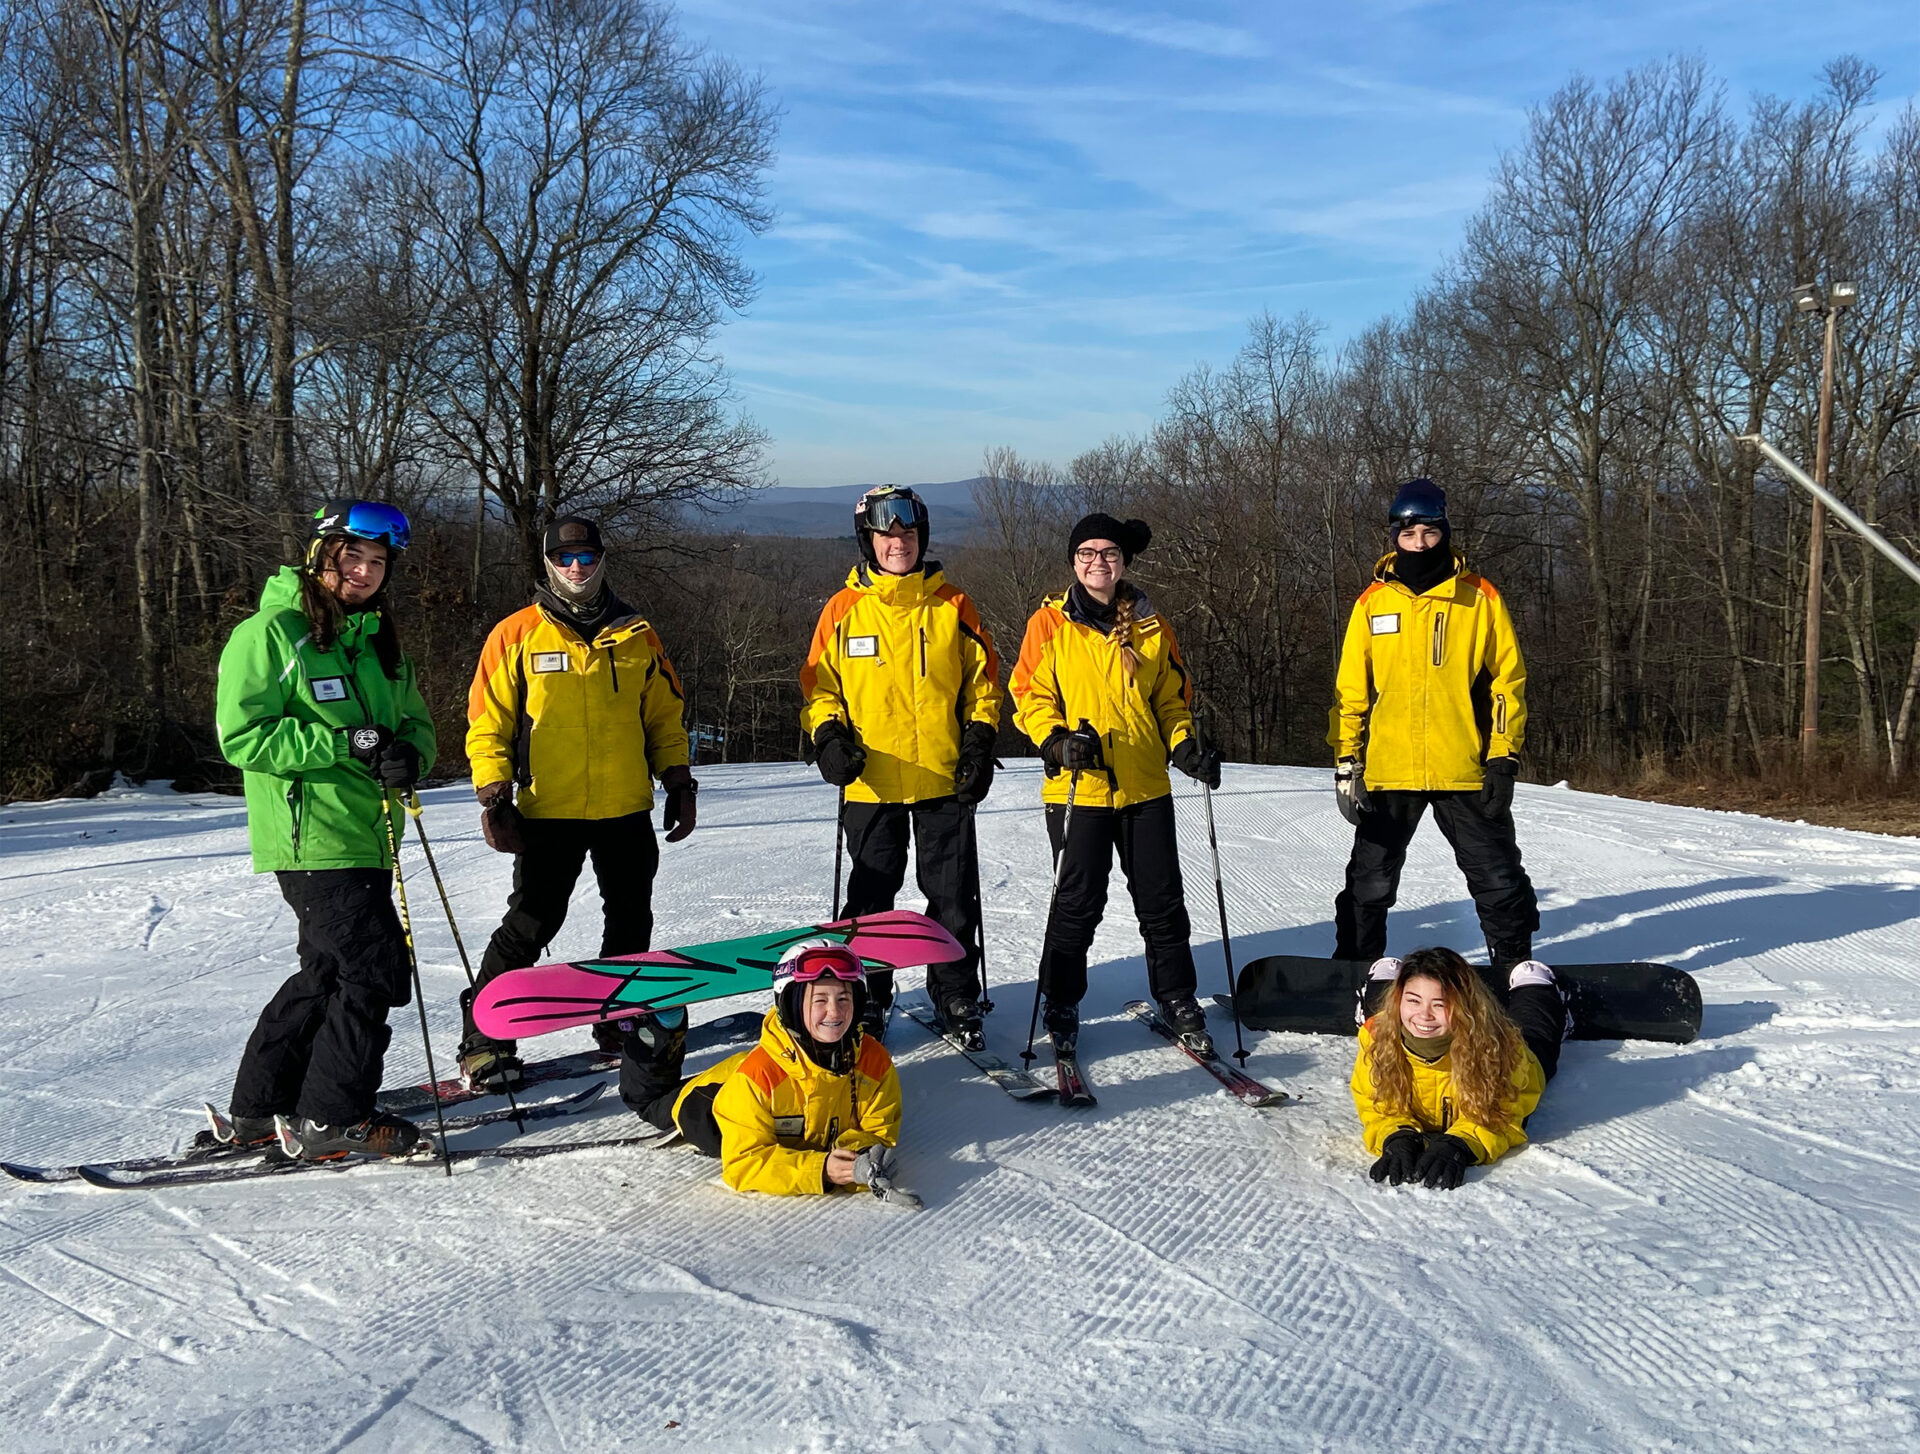 Ski School instructors posing on the mountain